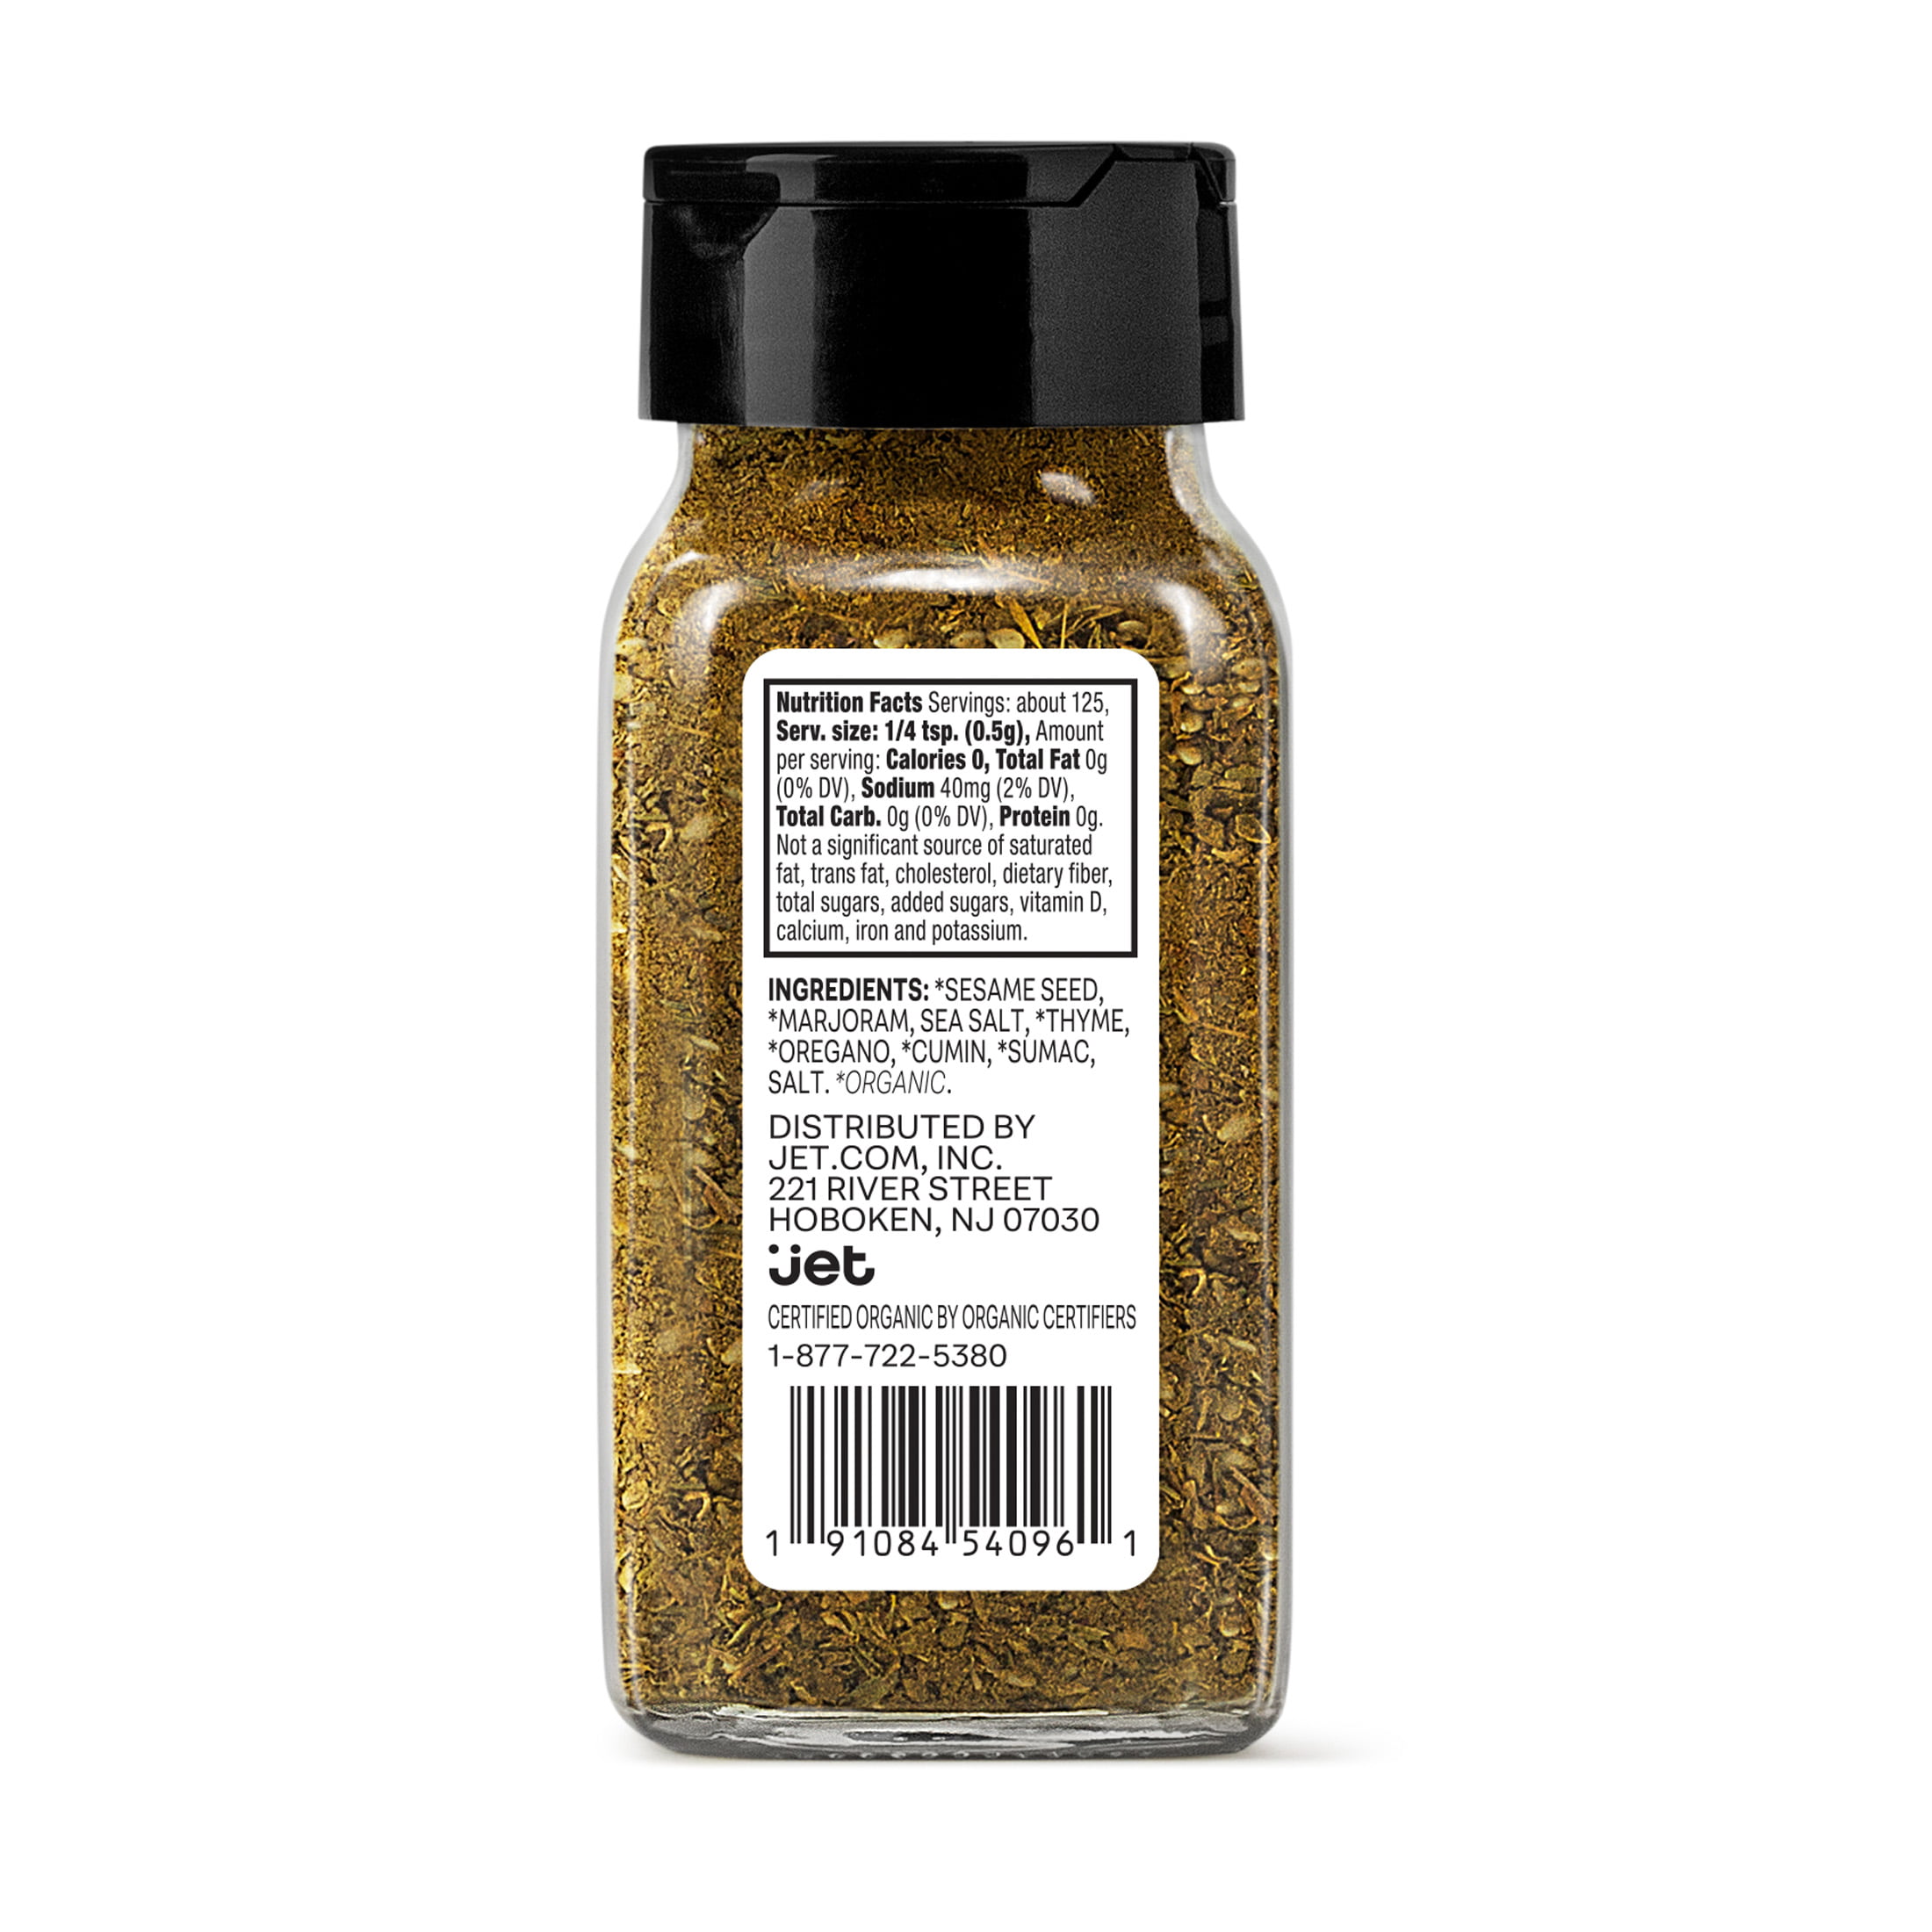 Za'atar Spice Blend - Jar, 1/2 Cup, 2.1 oz. - The Spice House